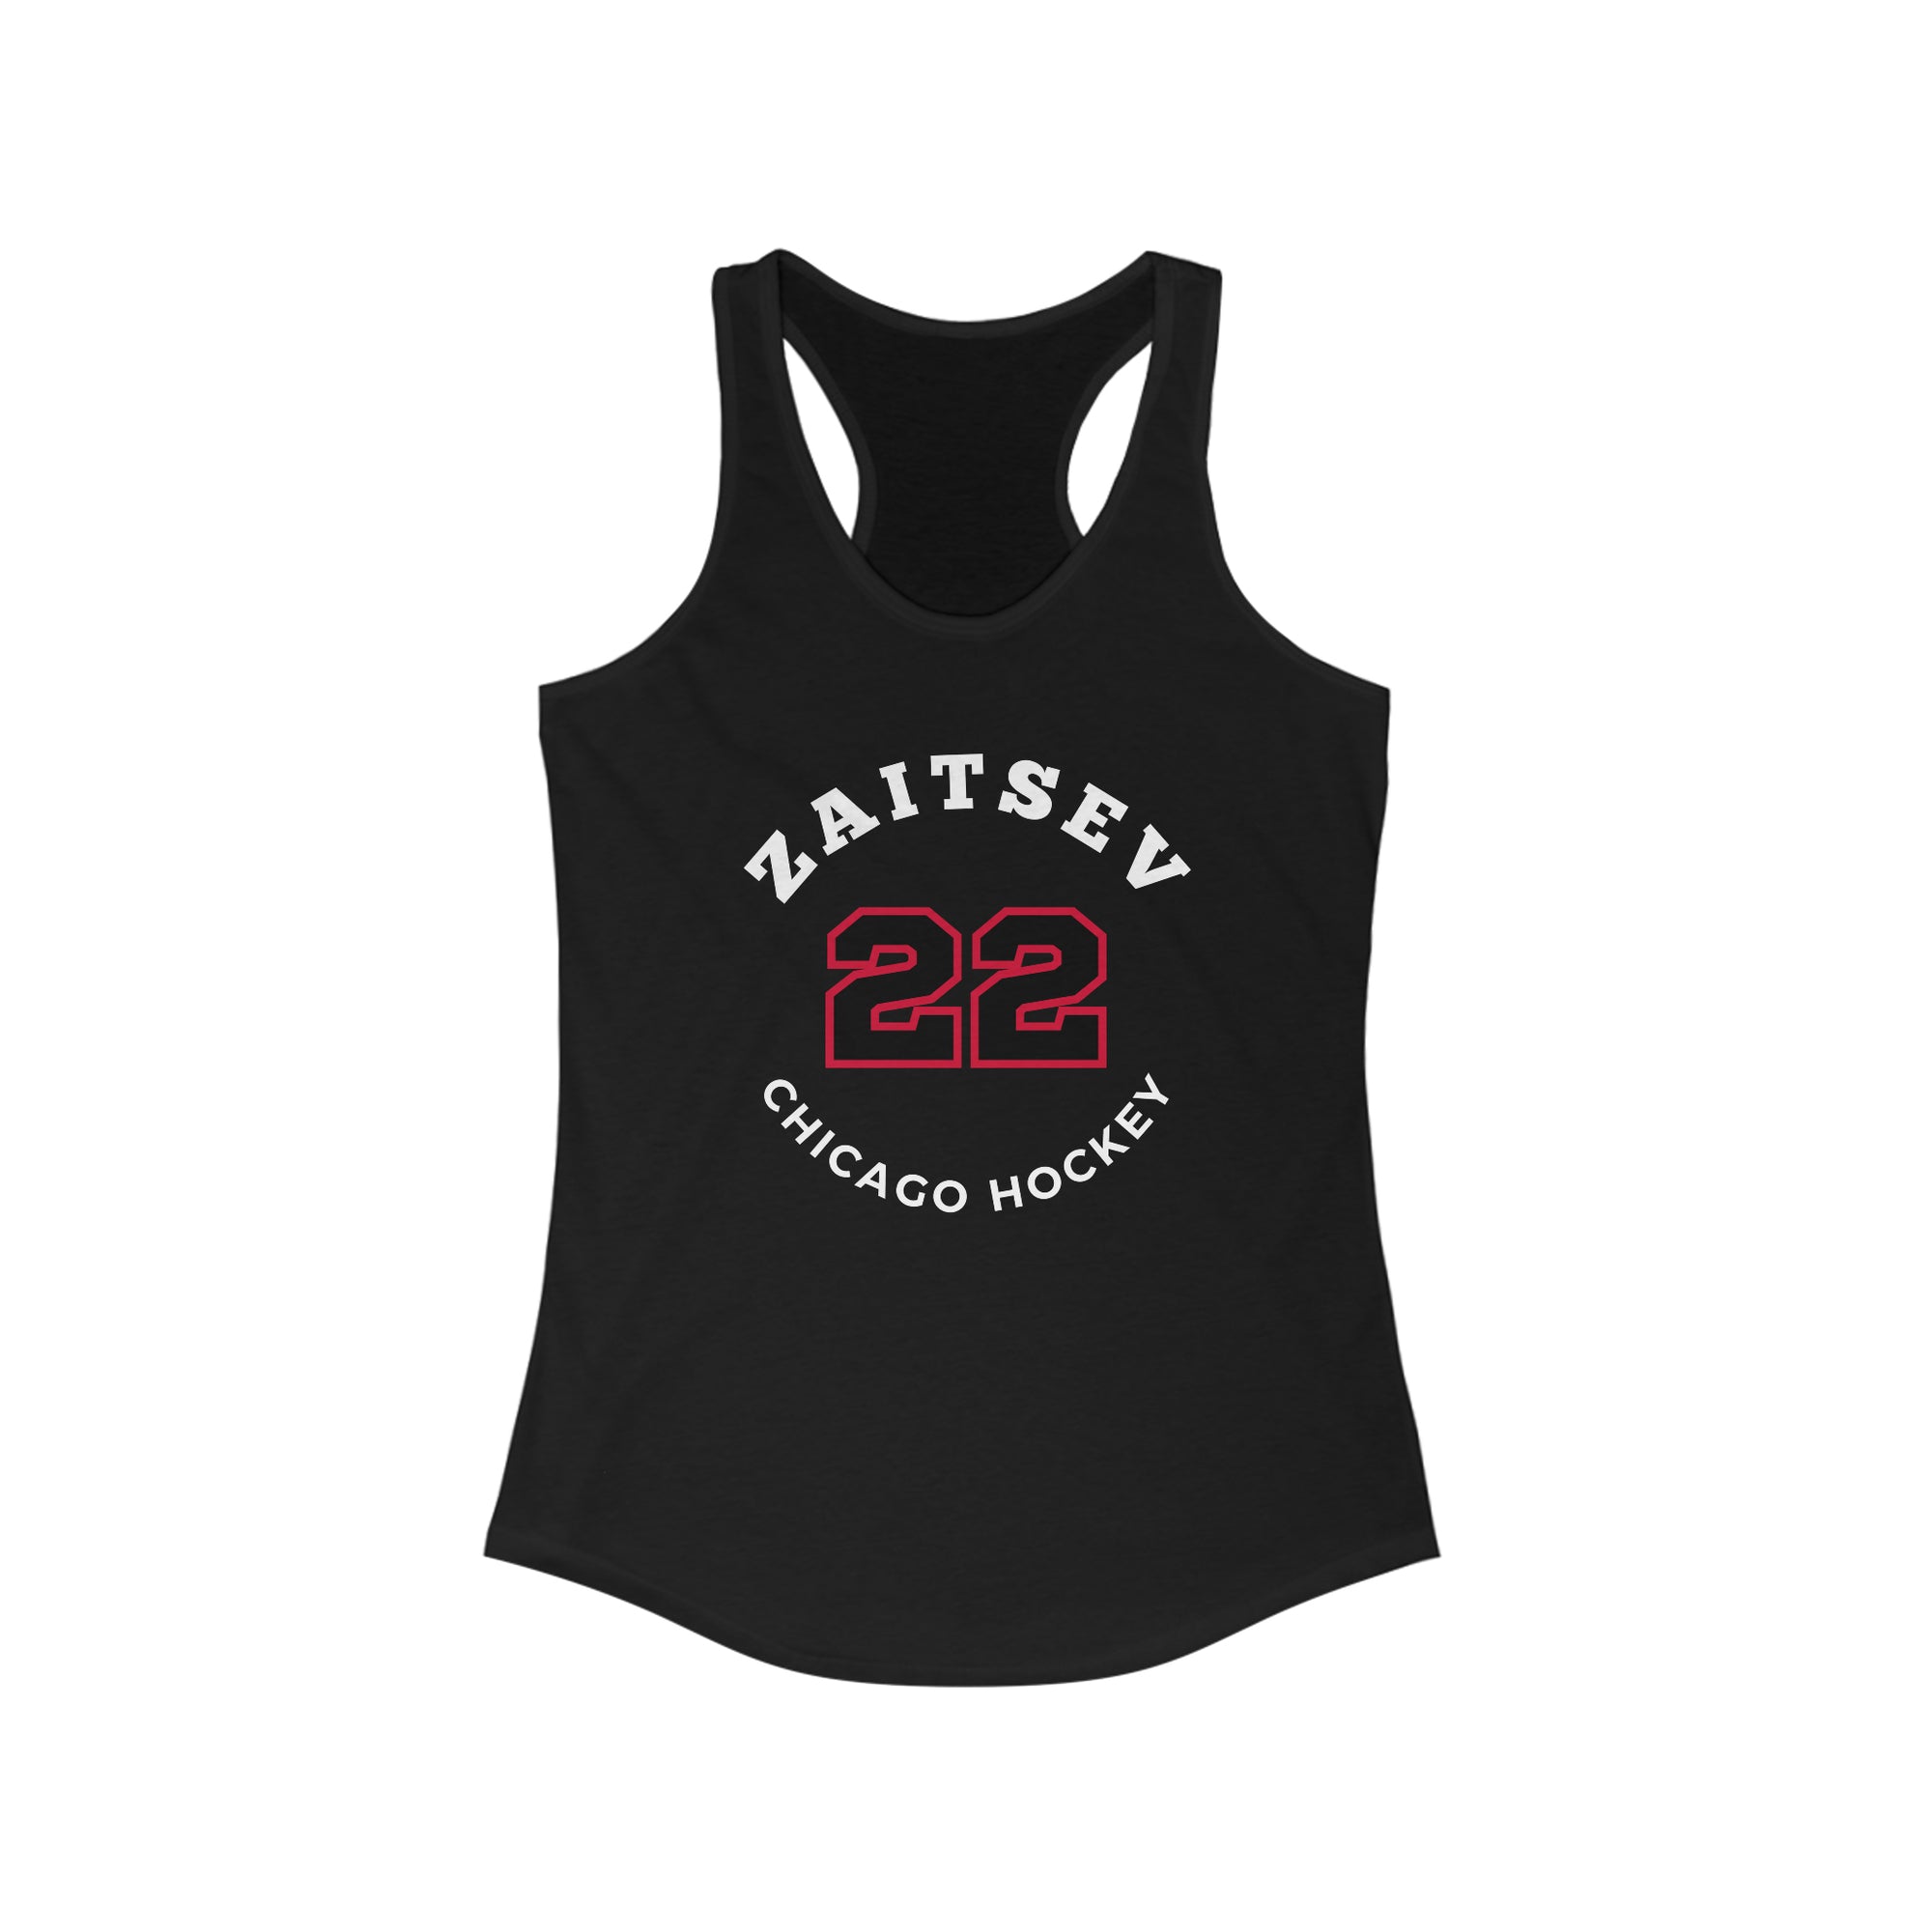 Zaitsev 22 Chicago Hockey Number Arch Design Women's Ideal Racerback Tank Top